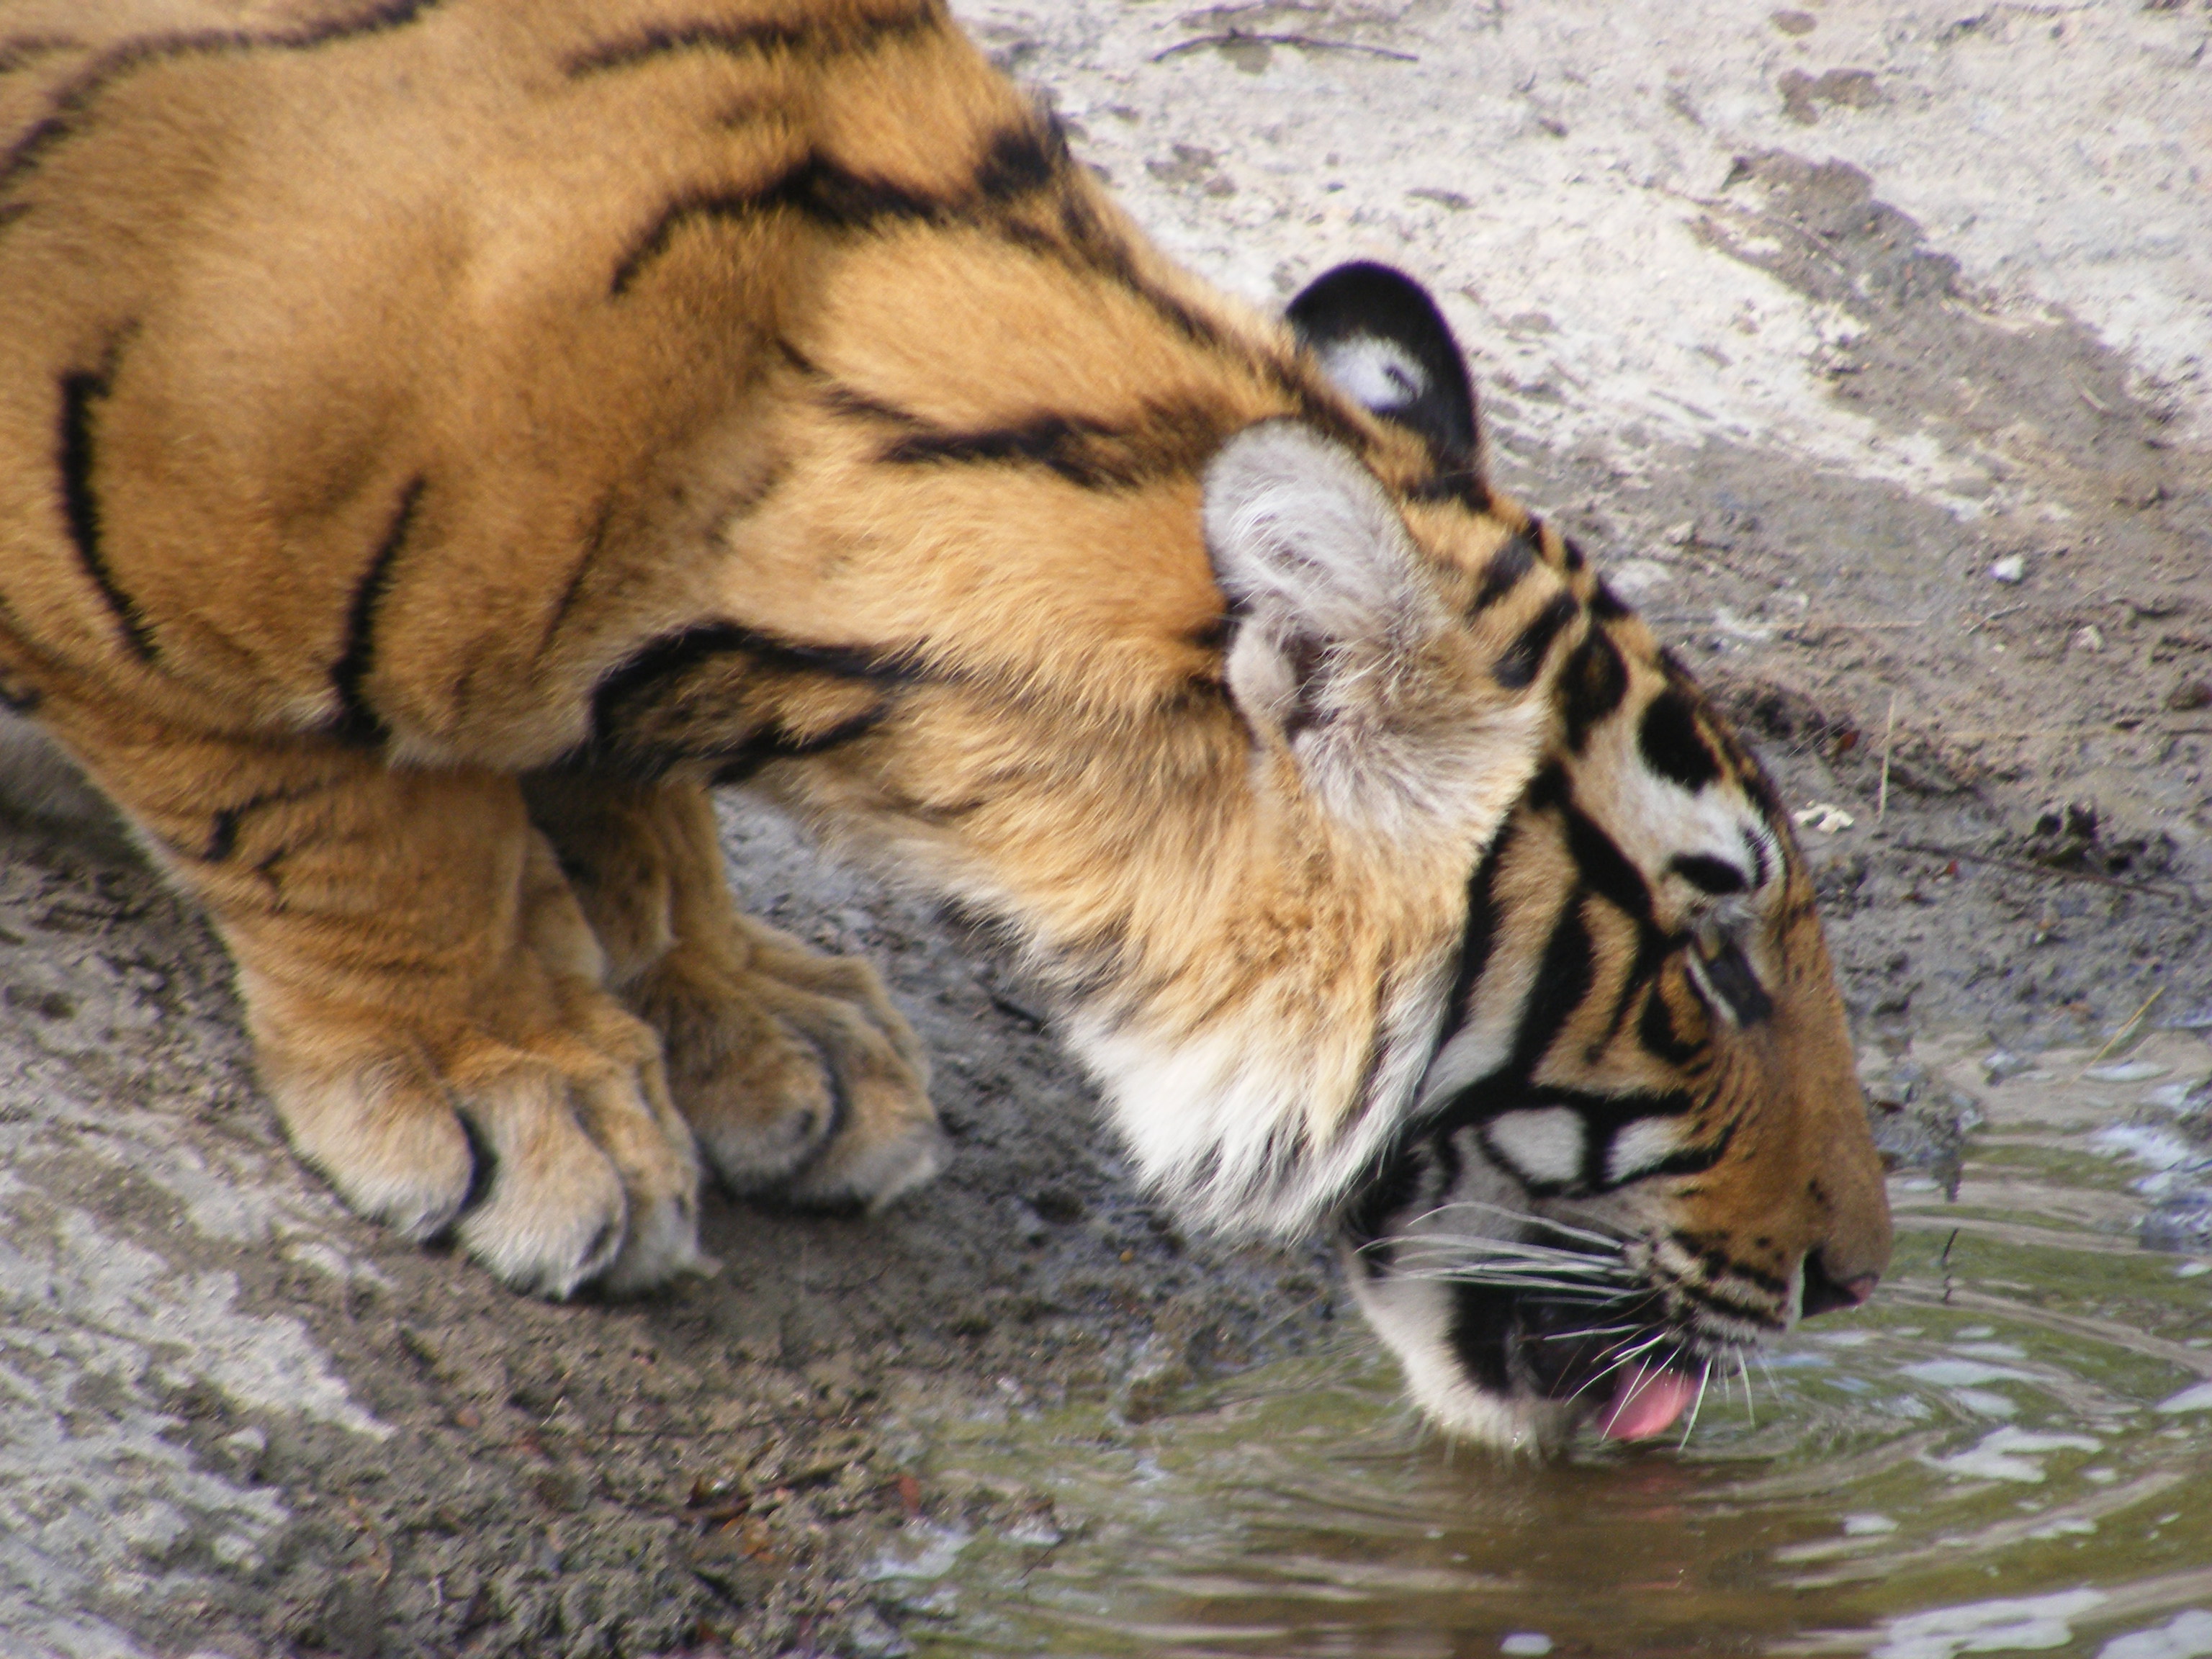 Tiger_Drinking_Water.jpg